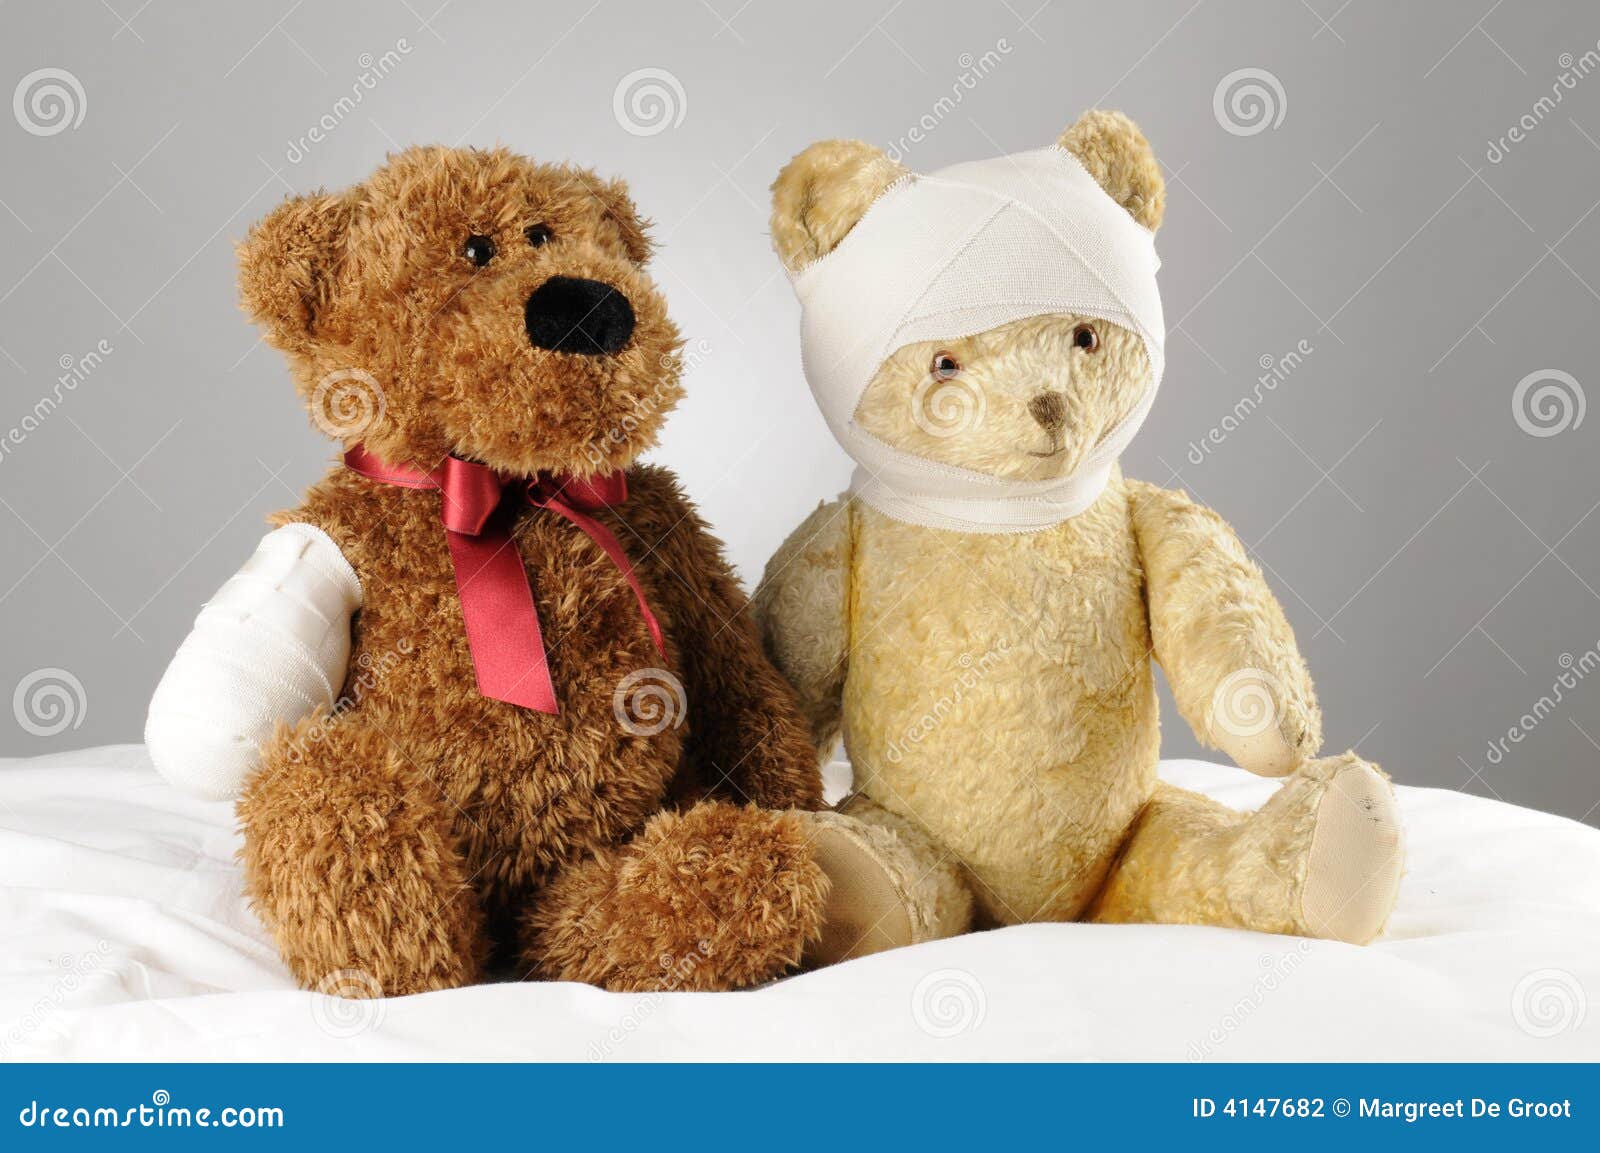 injured teddy bear clip art - photo #46